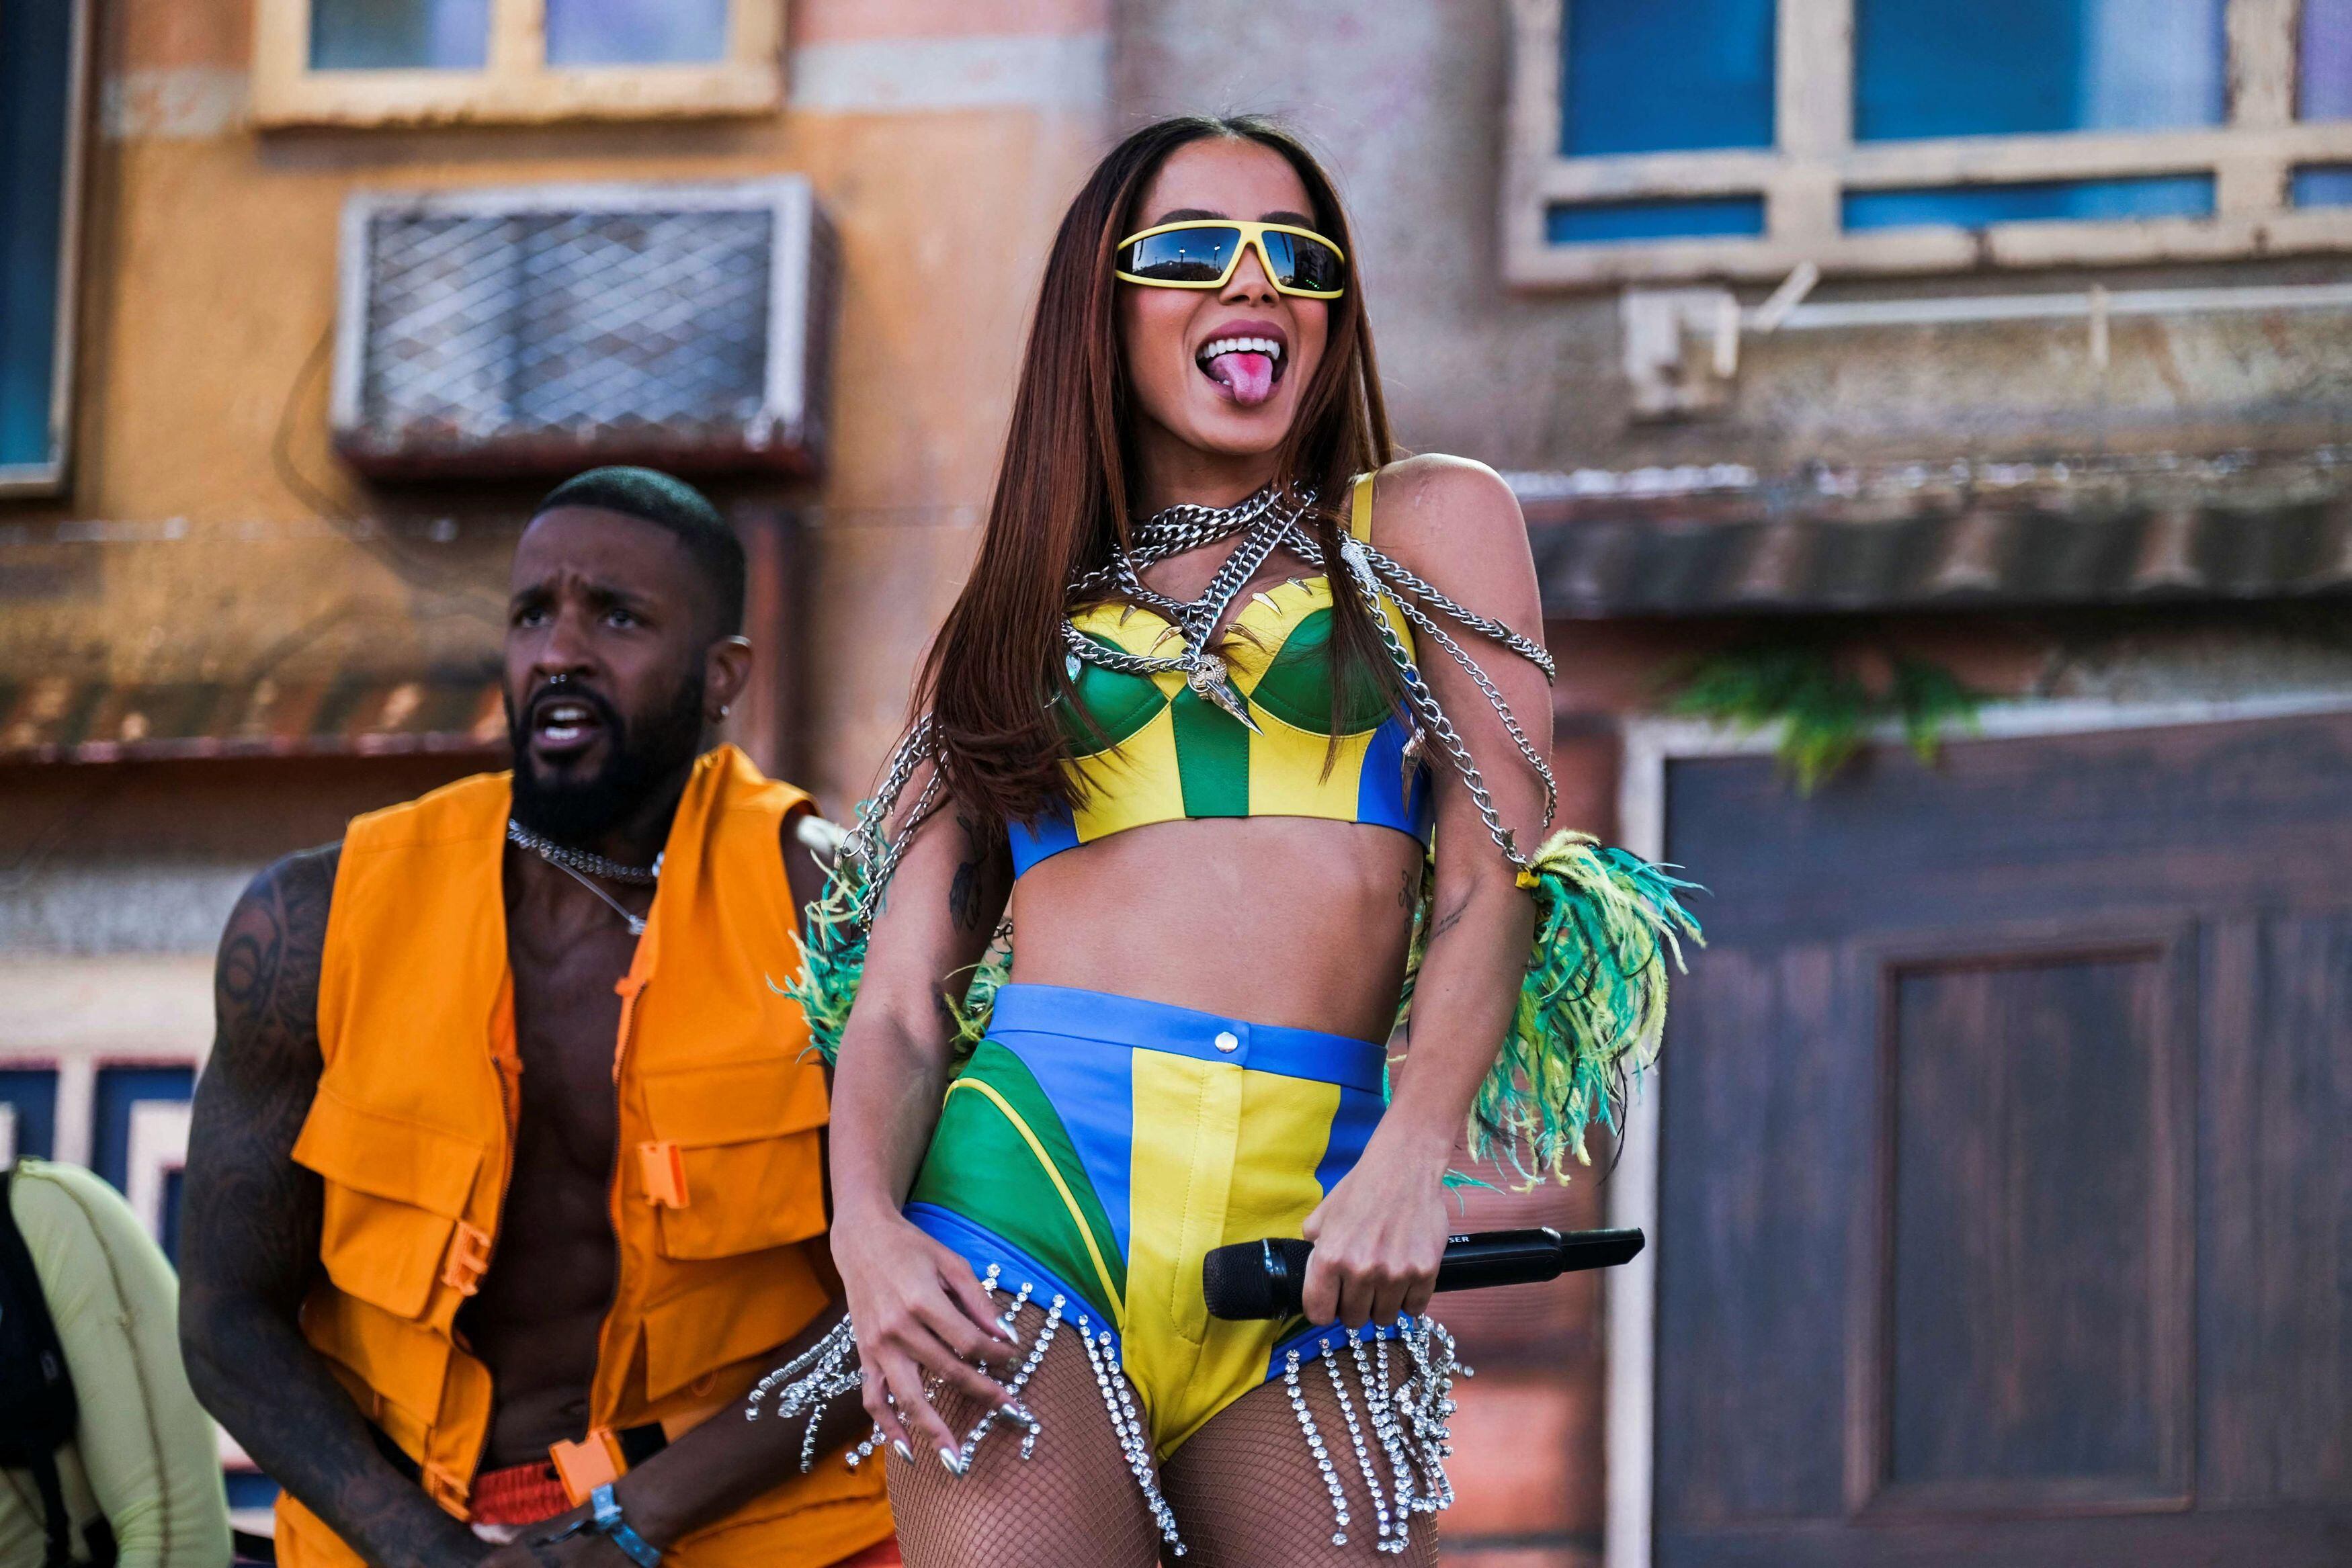 Anitta se apresenta em desfile da Rihanna. Veja as fotos - The Music  Journal Brazil